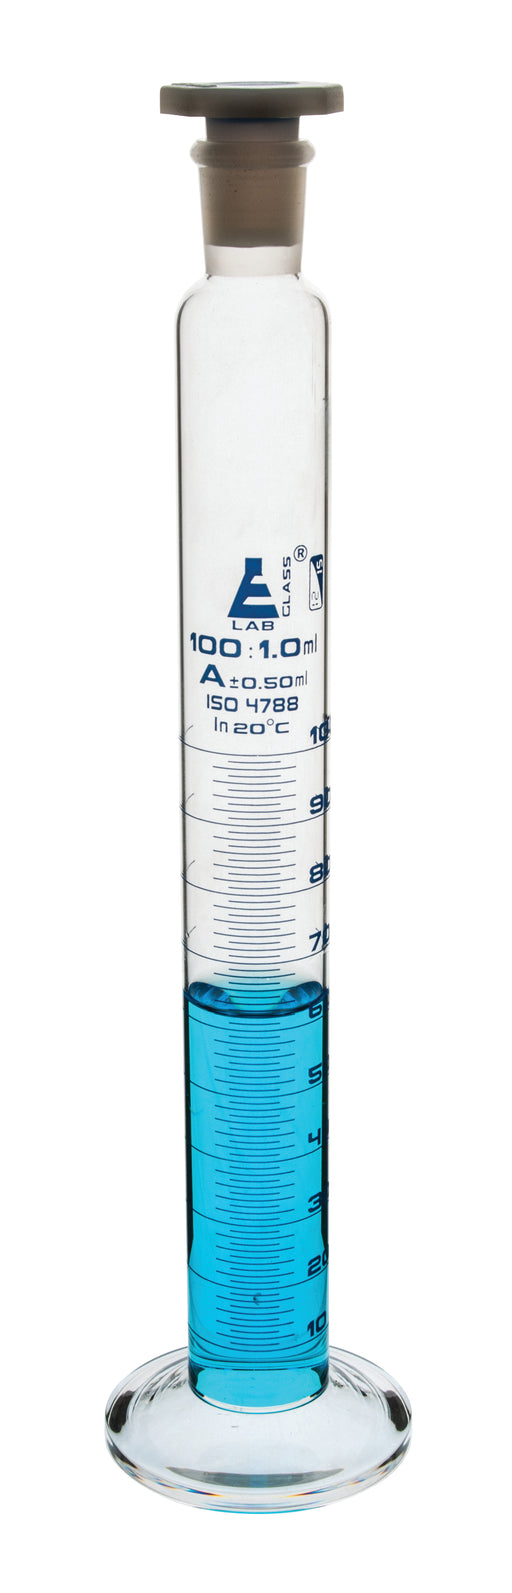 Measuring Cylinder, 2000ml - Class A - 34/35 Polypropylene Stopper - Round Base, Blue Graduations - Borosilicate Glass - Eisco Labs